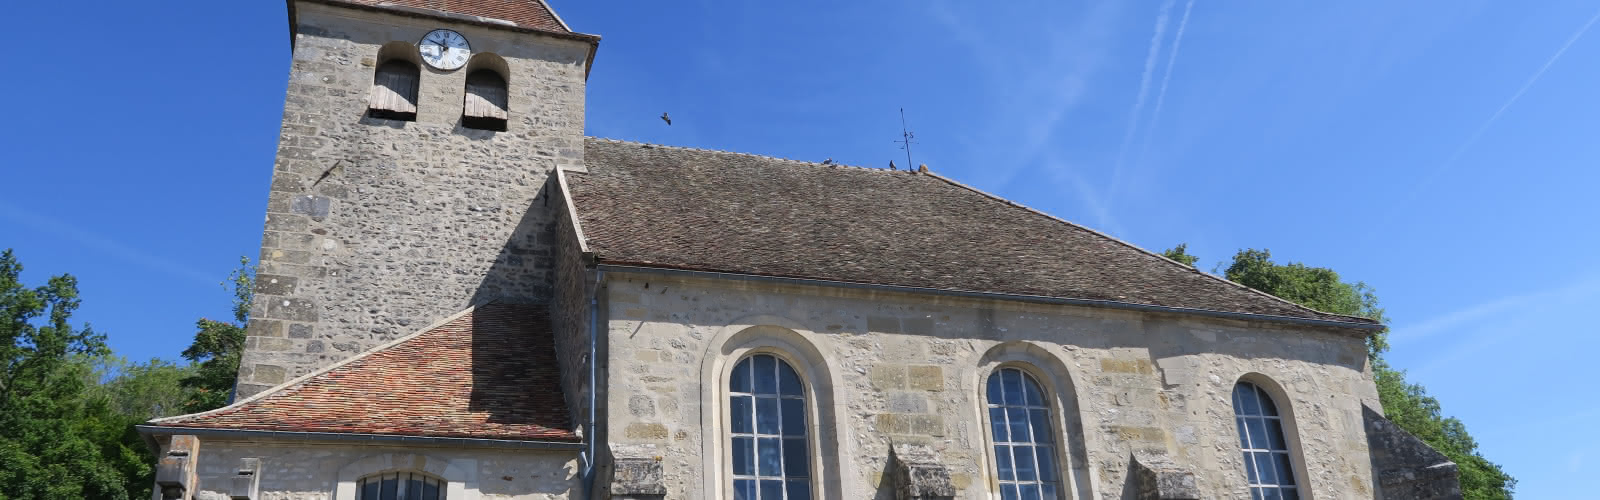 Eglise de Saint-Cyr-en-Arthies